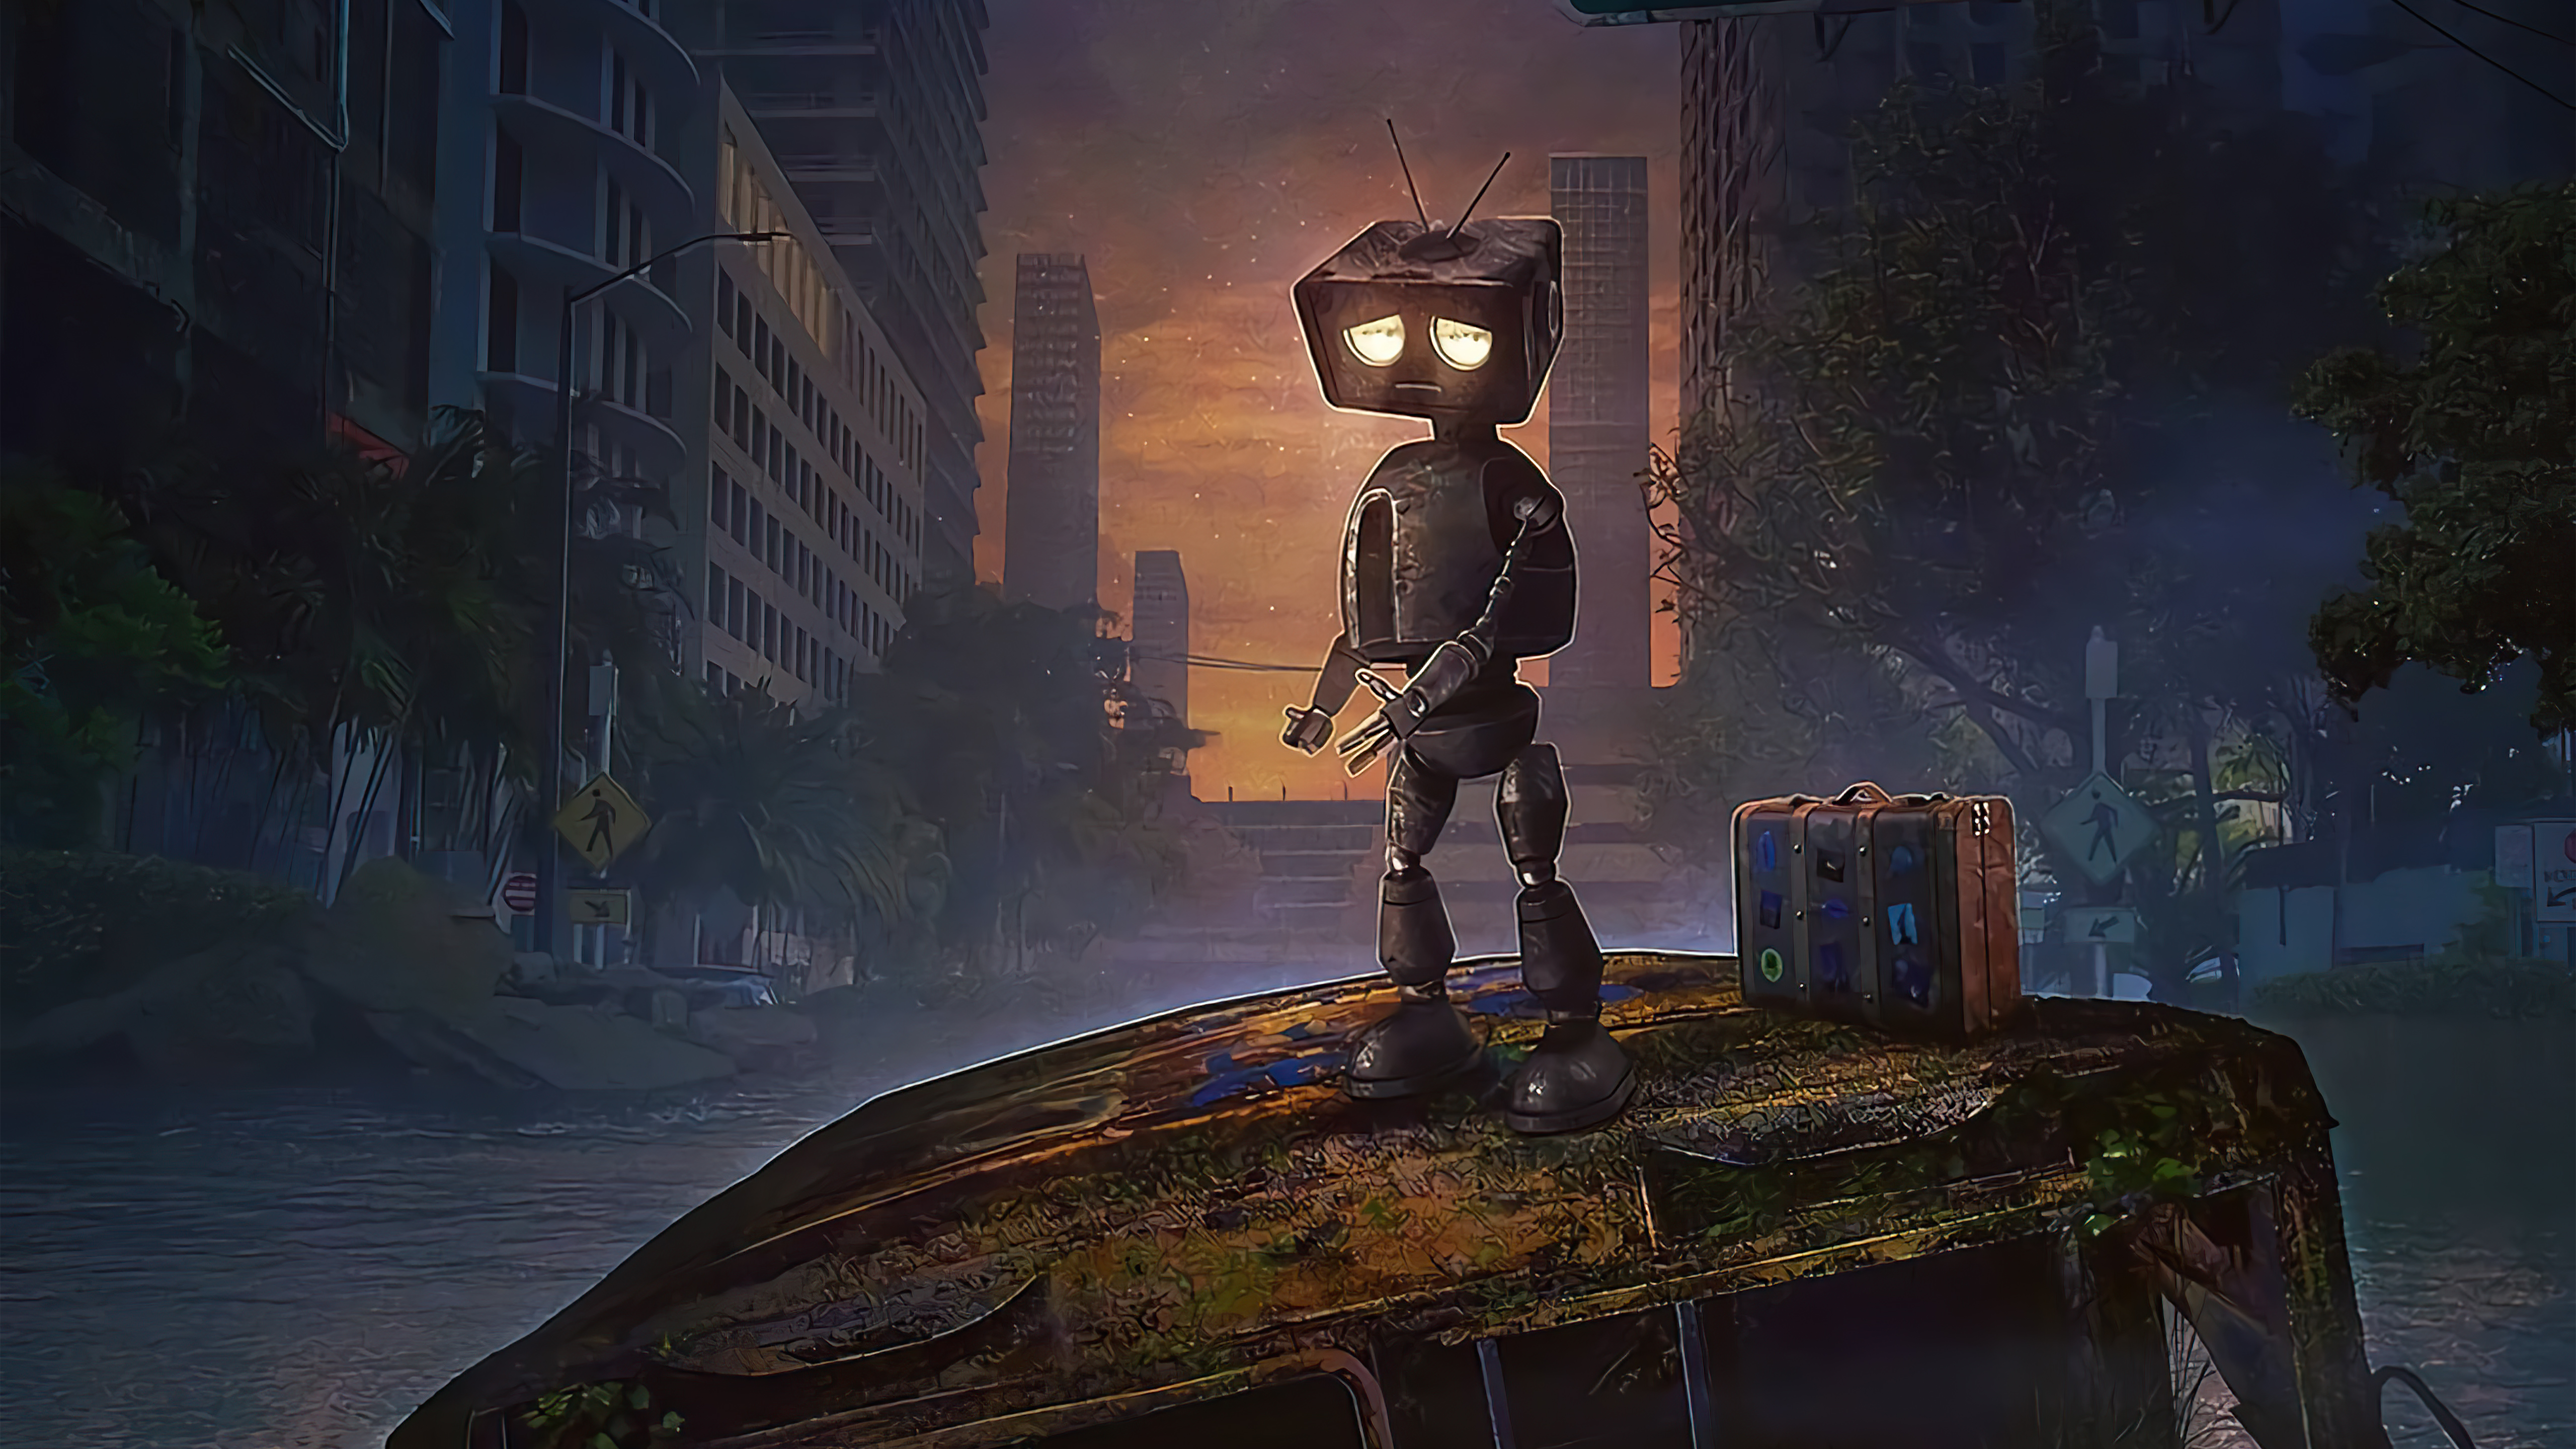 A sad robot in a forgotten city